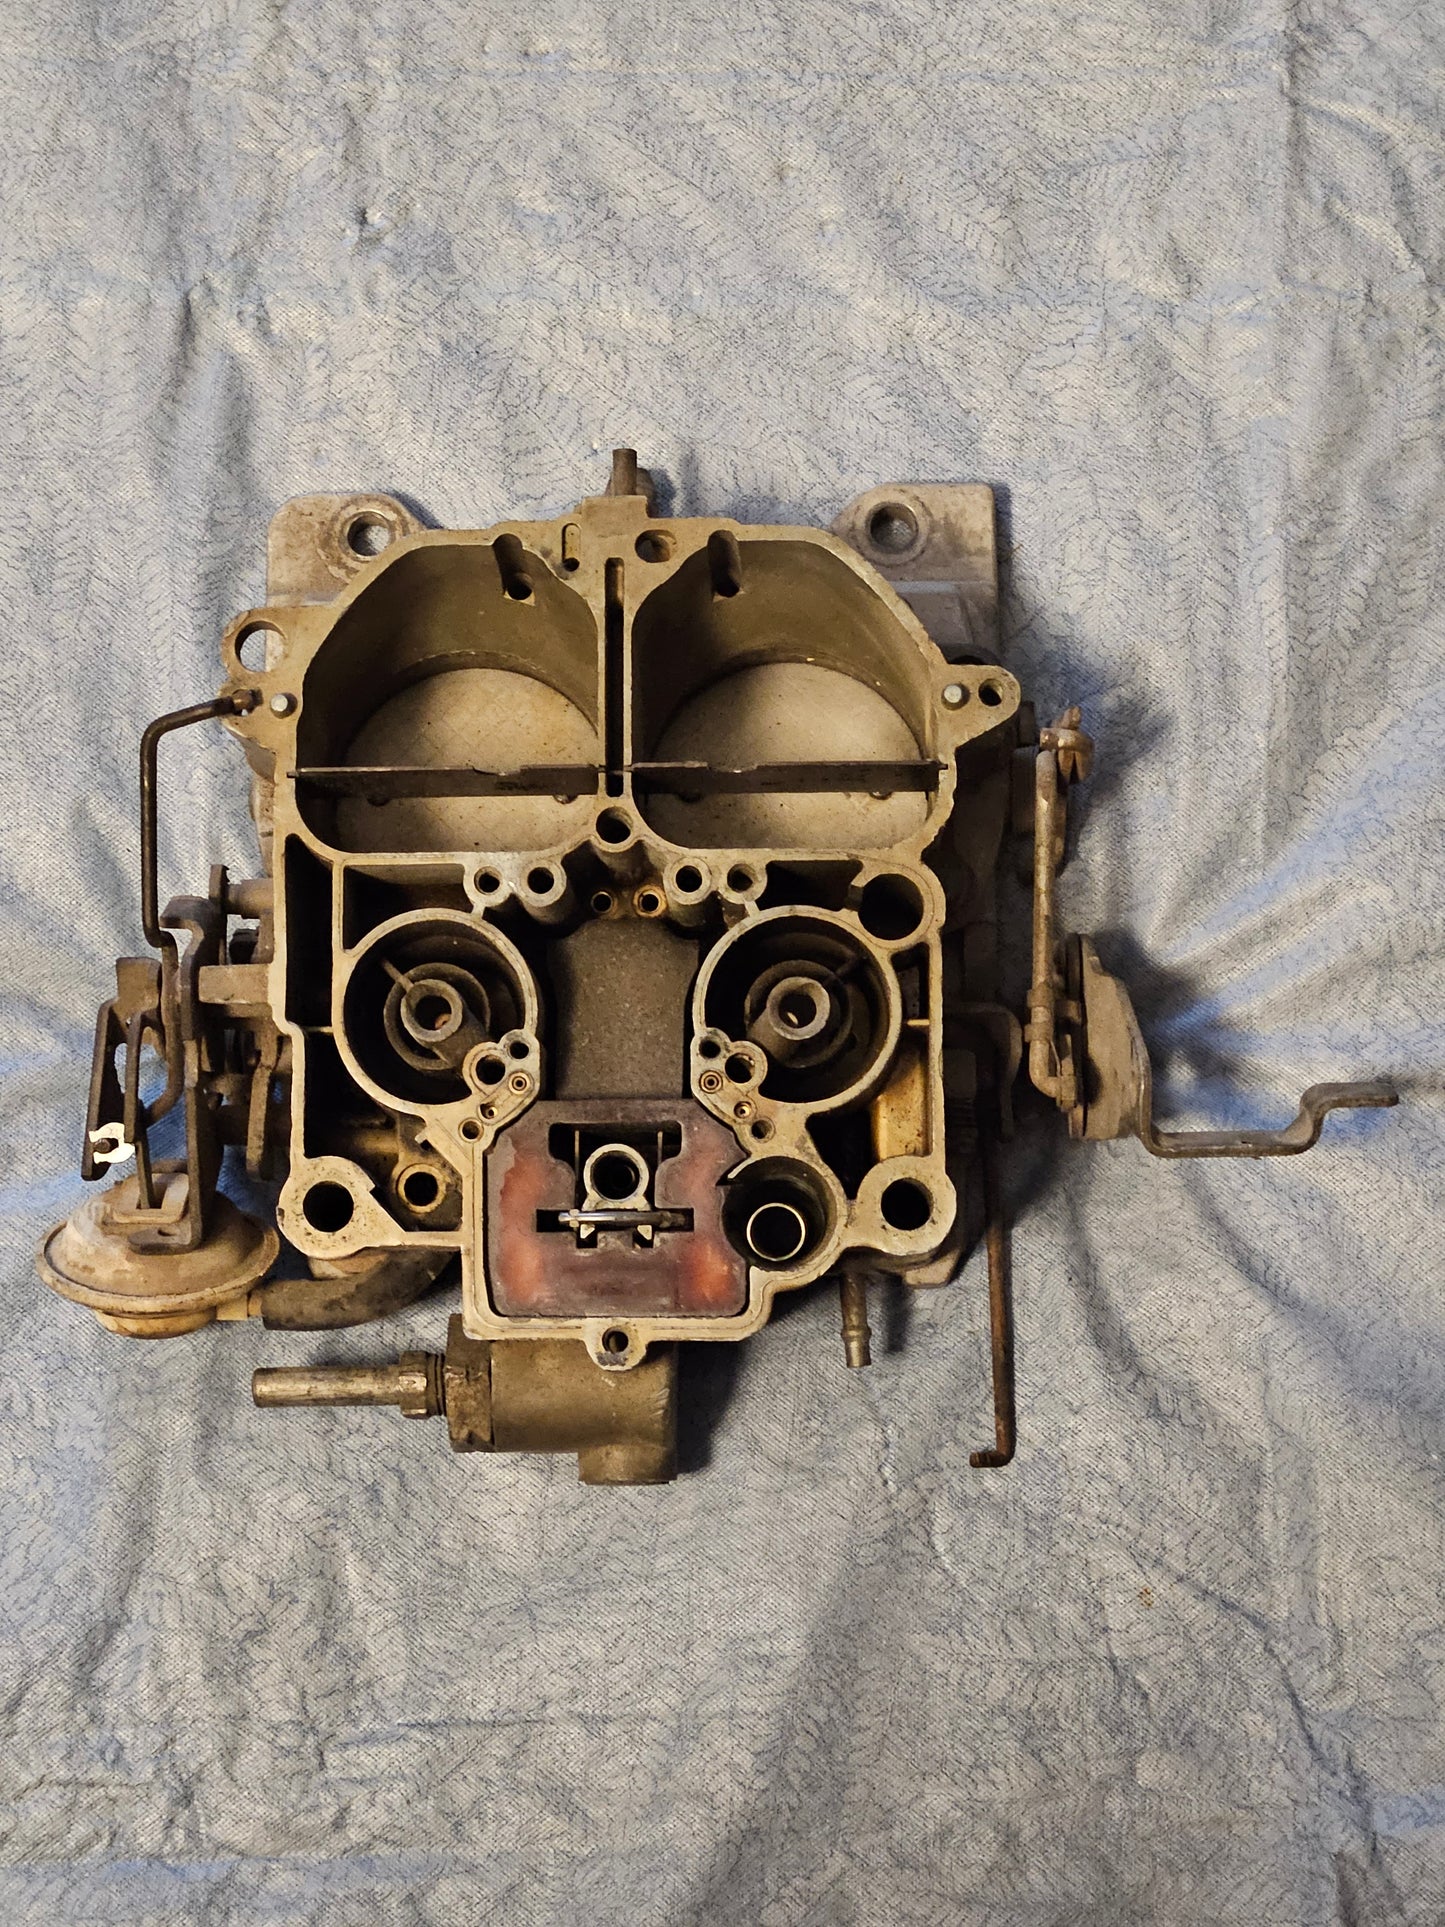 Rochester Quadrajet 4bbl Carburetor Core Parts 2nd Main Body Used